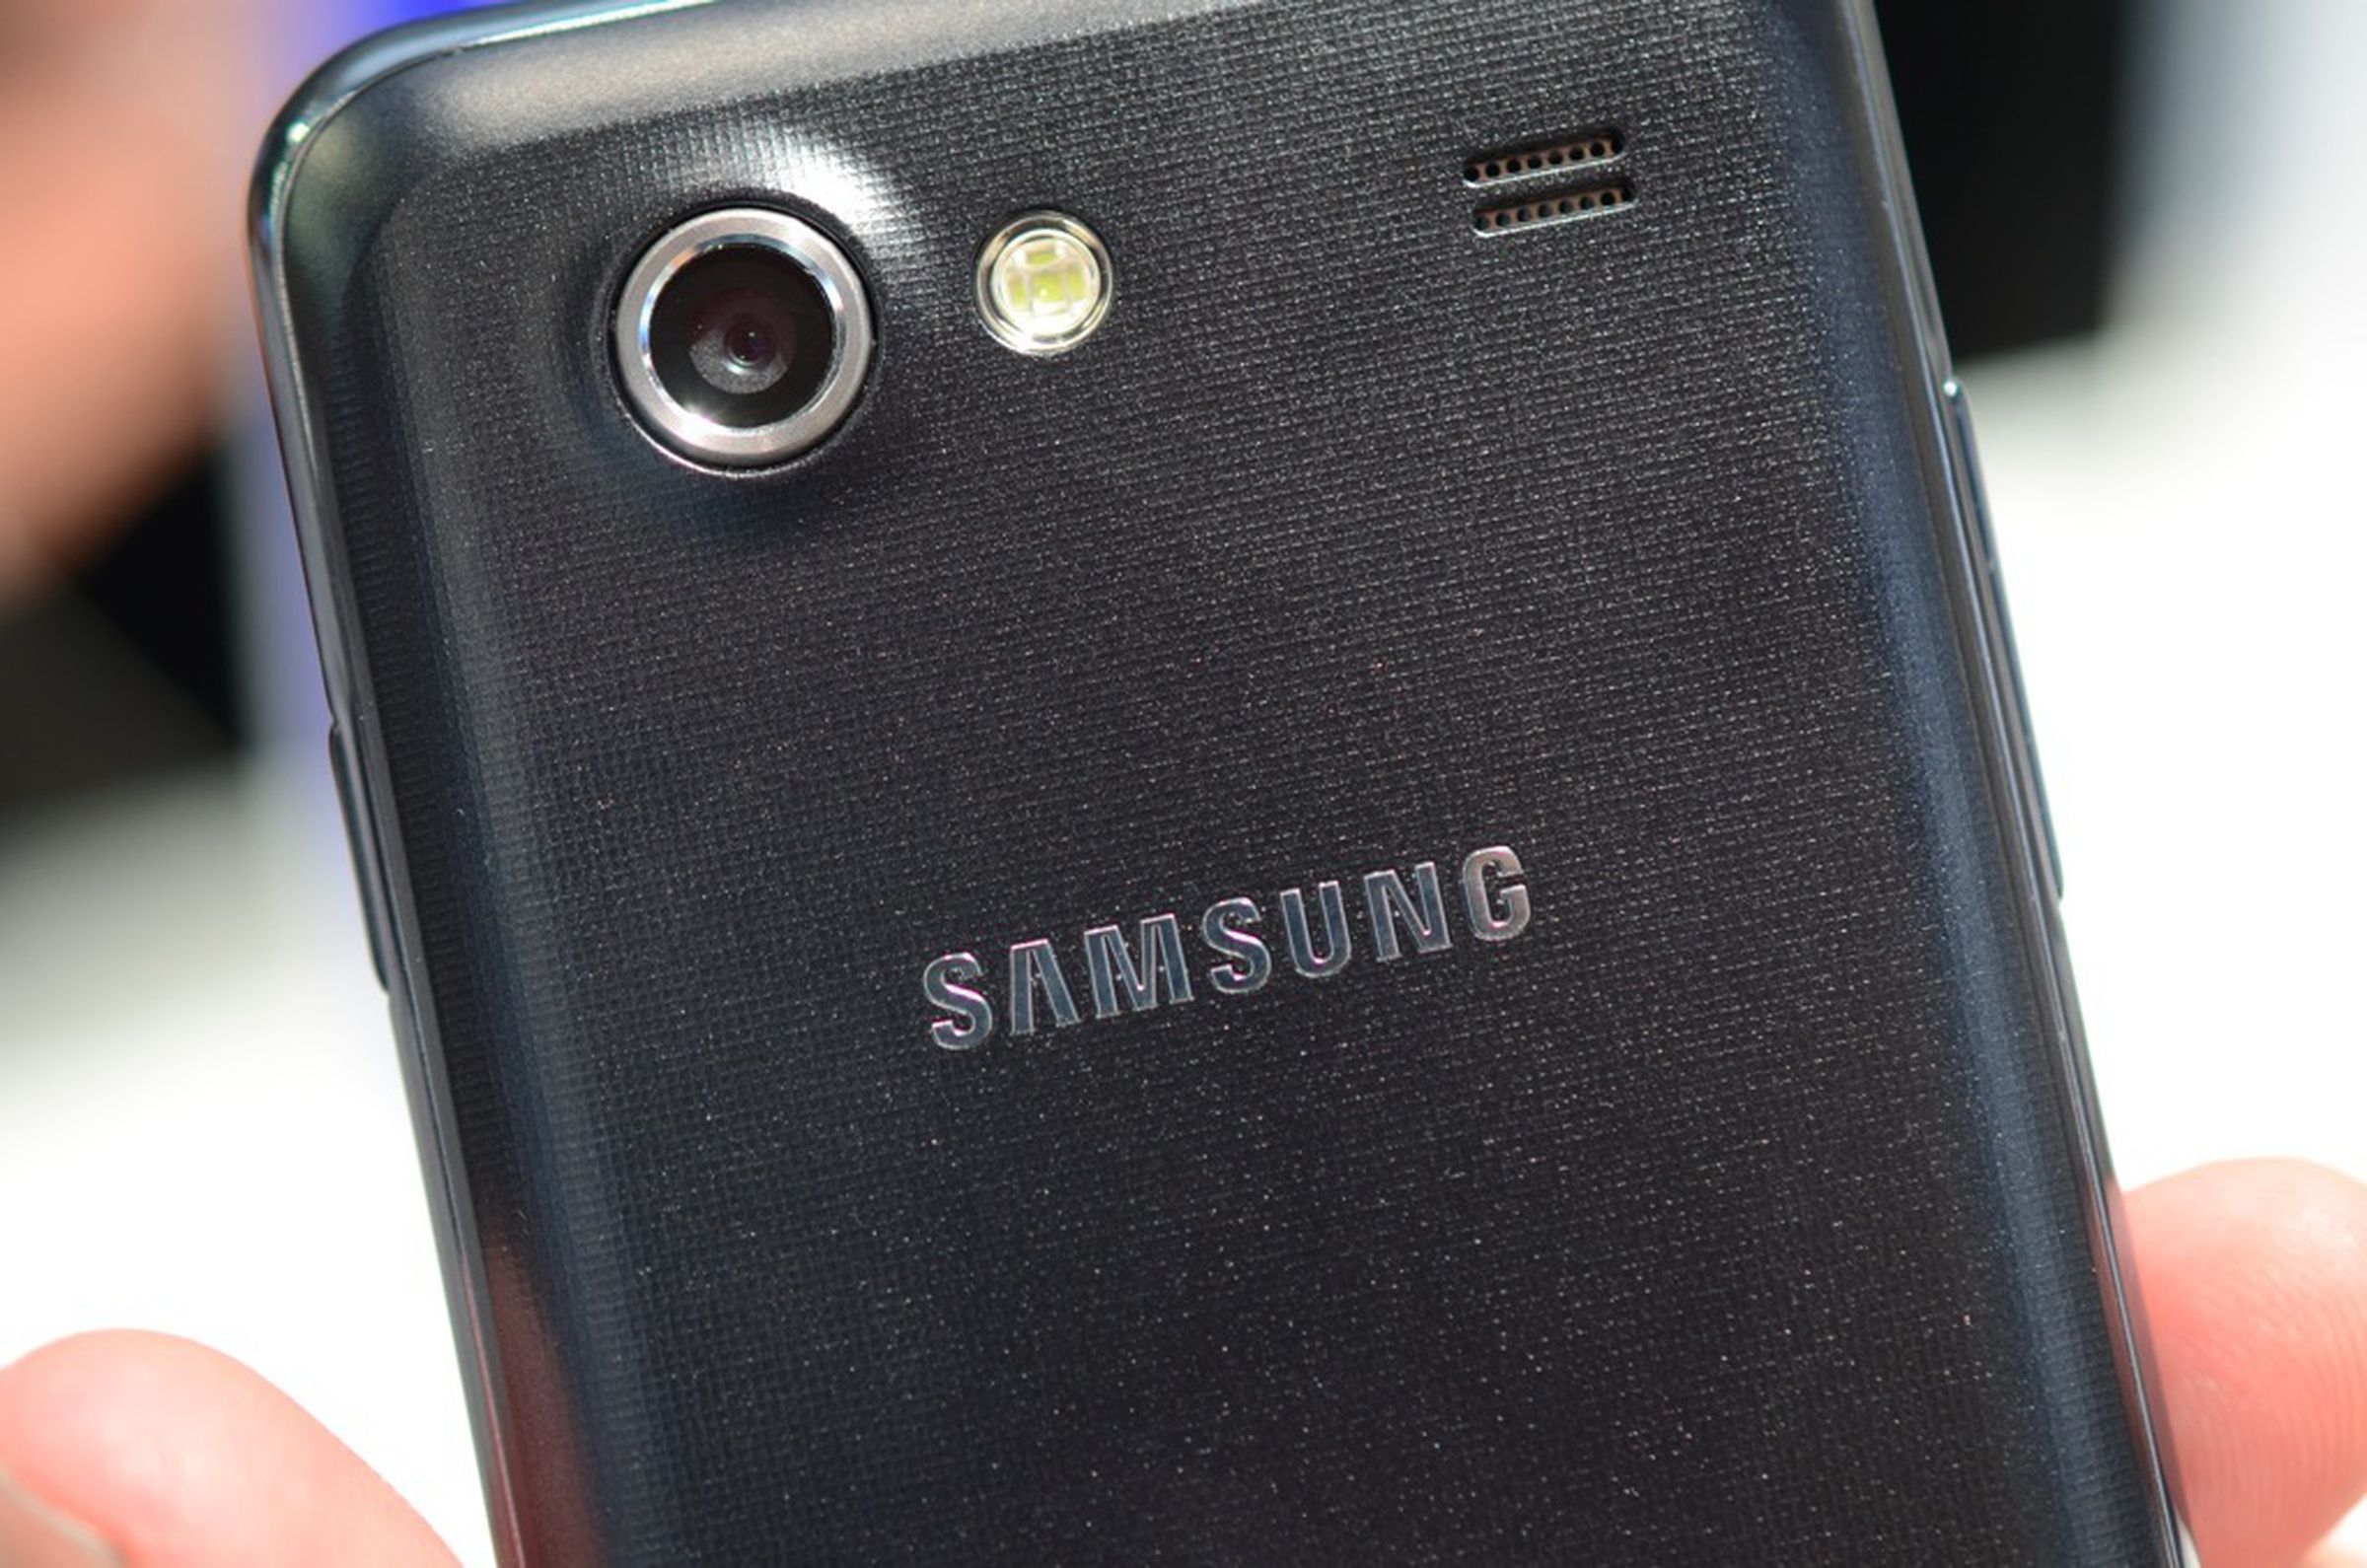 Samsung Galaxy S Advance hands-on photos